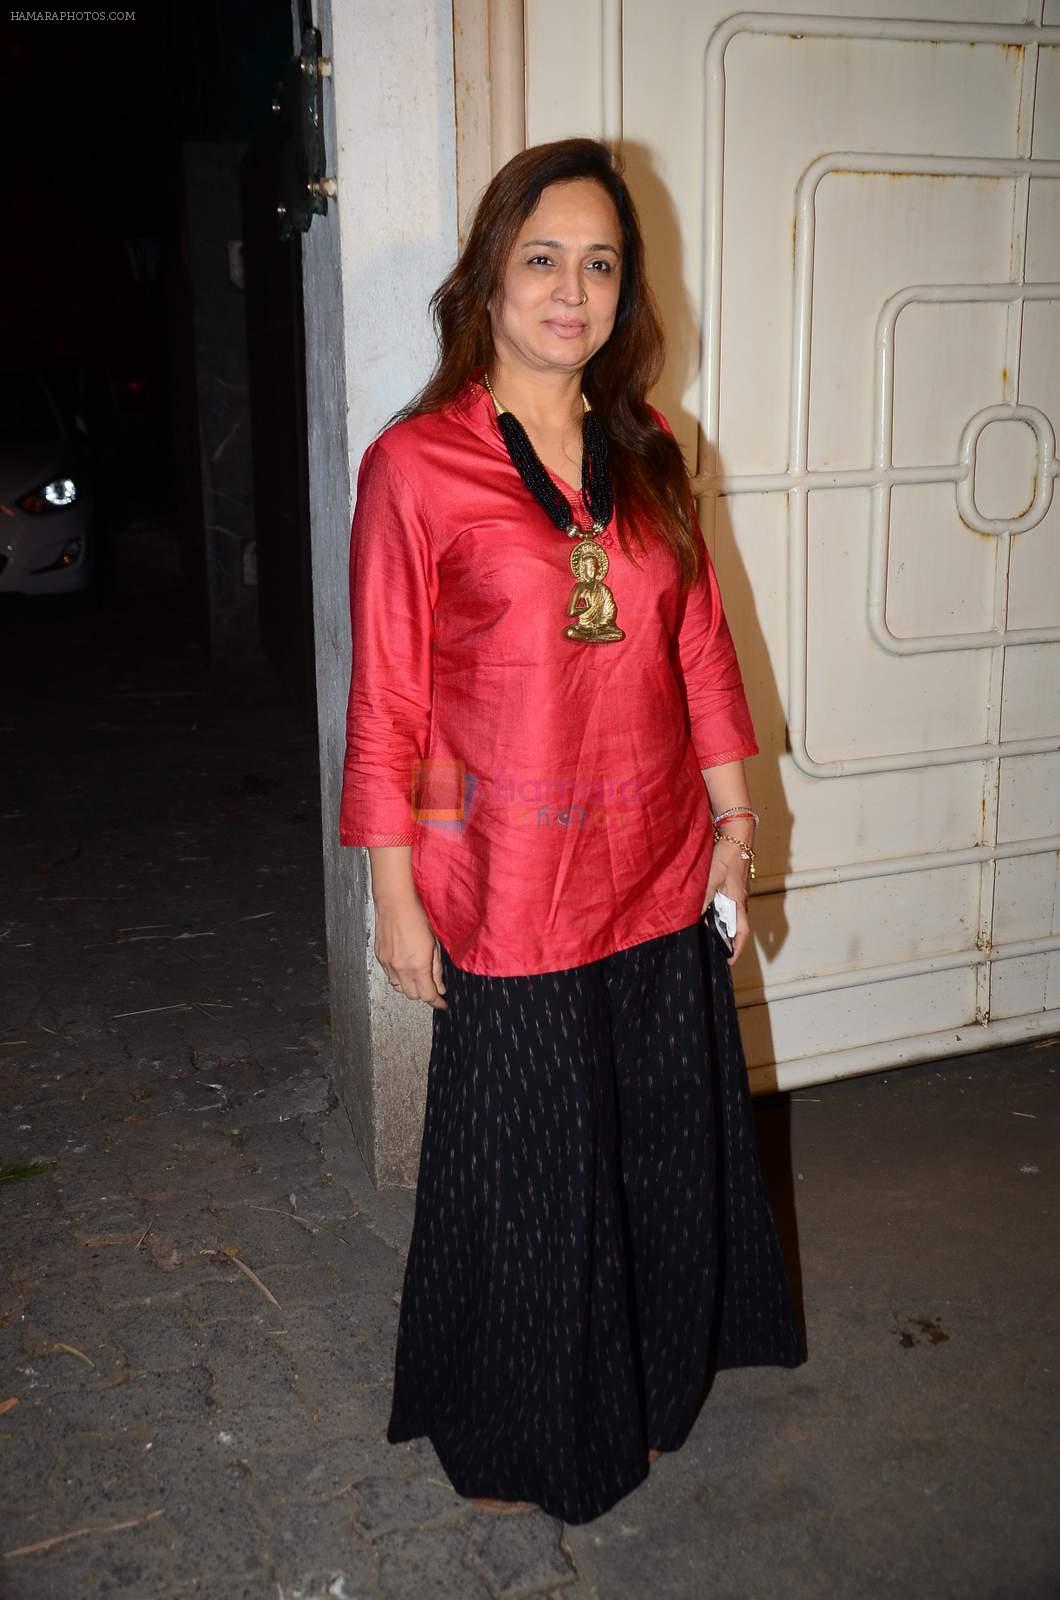 Smita Thackeray at Bajirao Mastani screening in Sunny Super Sound on 17th Dec 2015